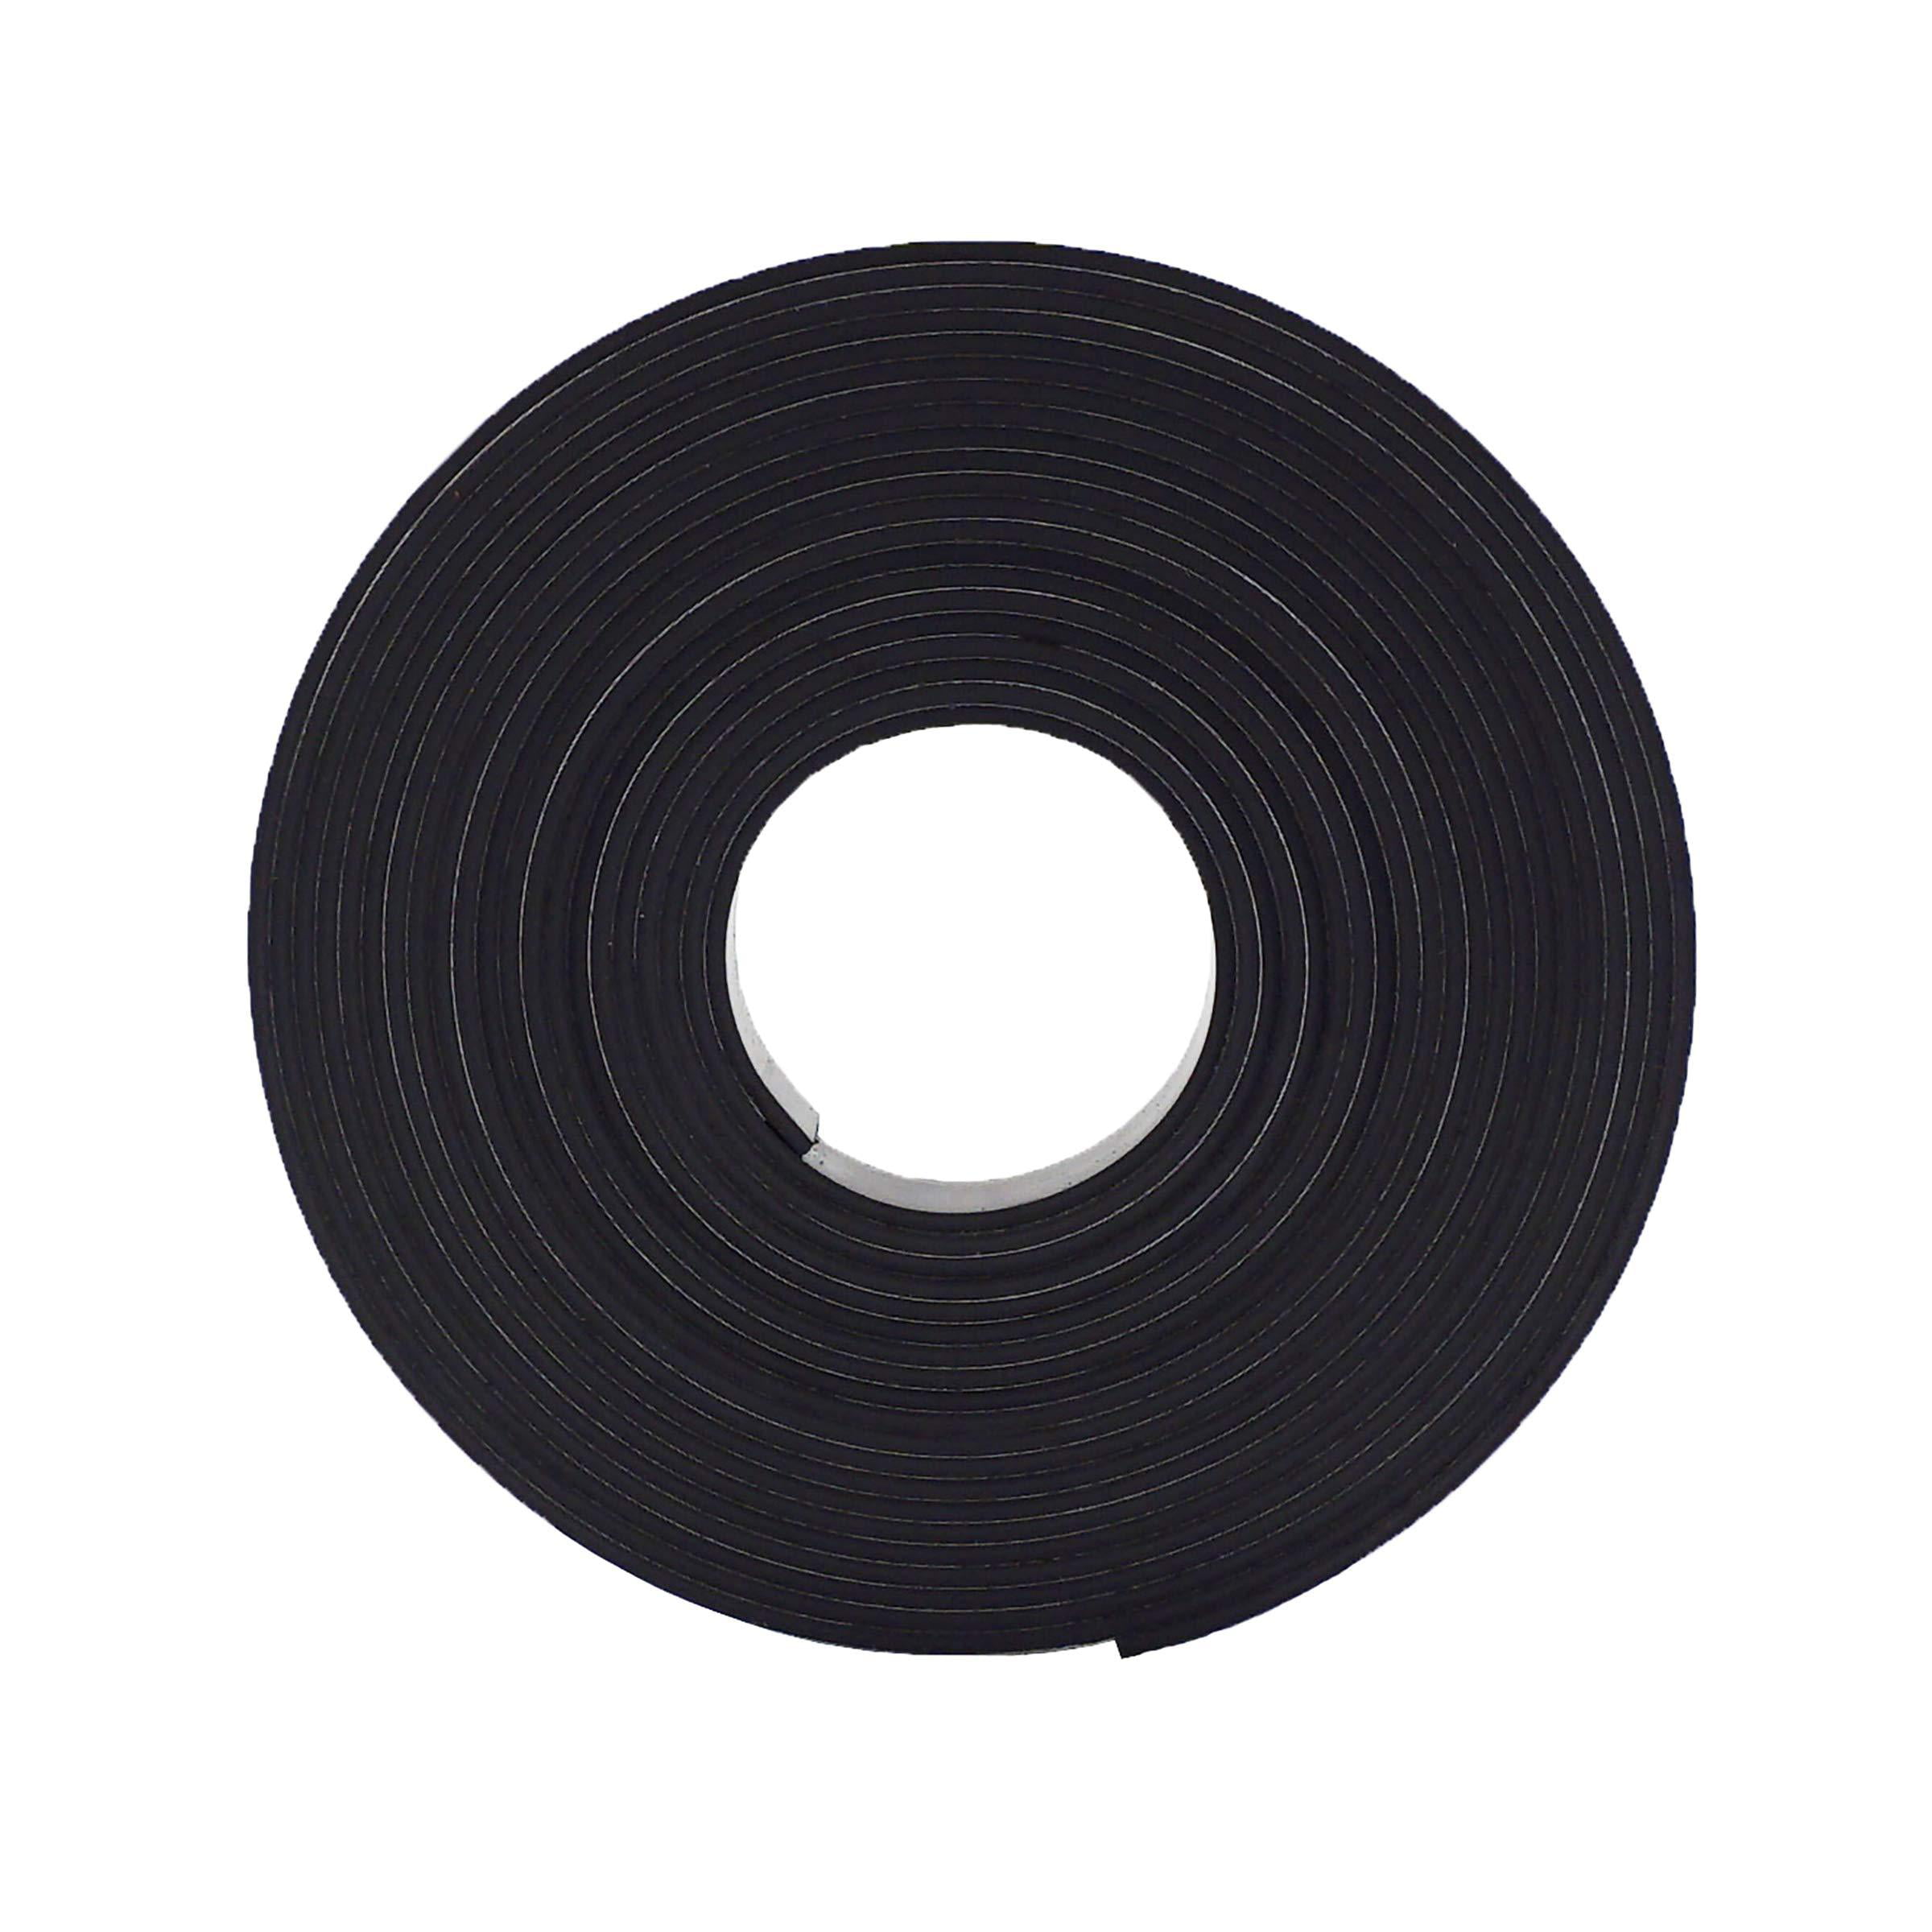 Magnetic Tape 2 Rolls Flexible Magnetic Strip(16 feet x 1/16